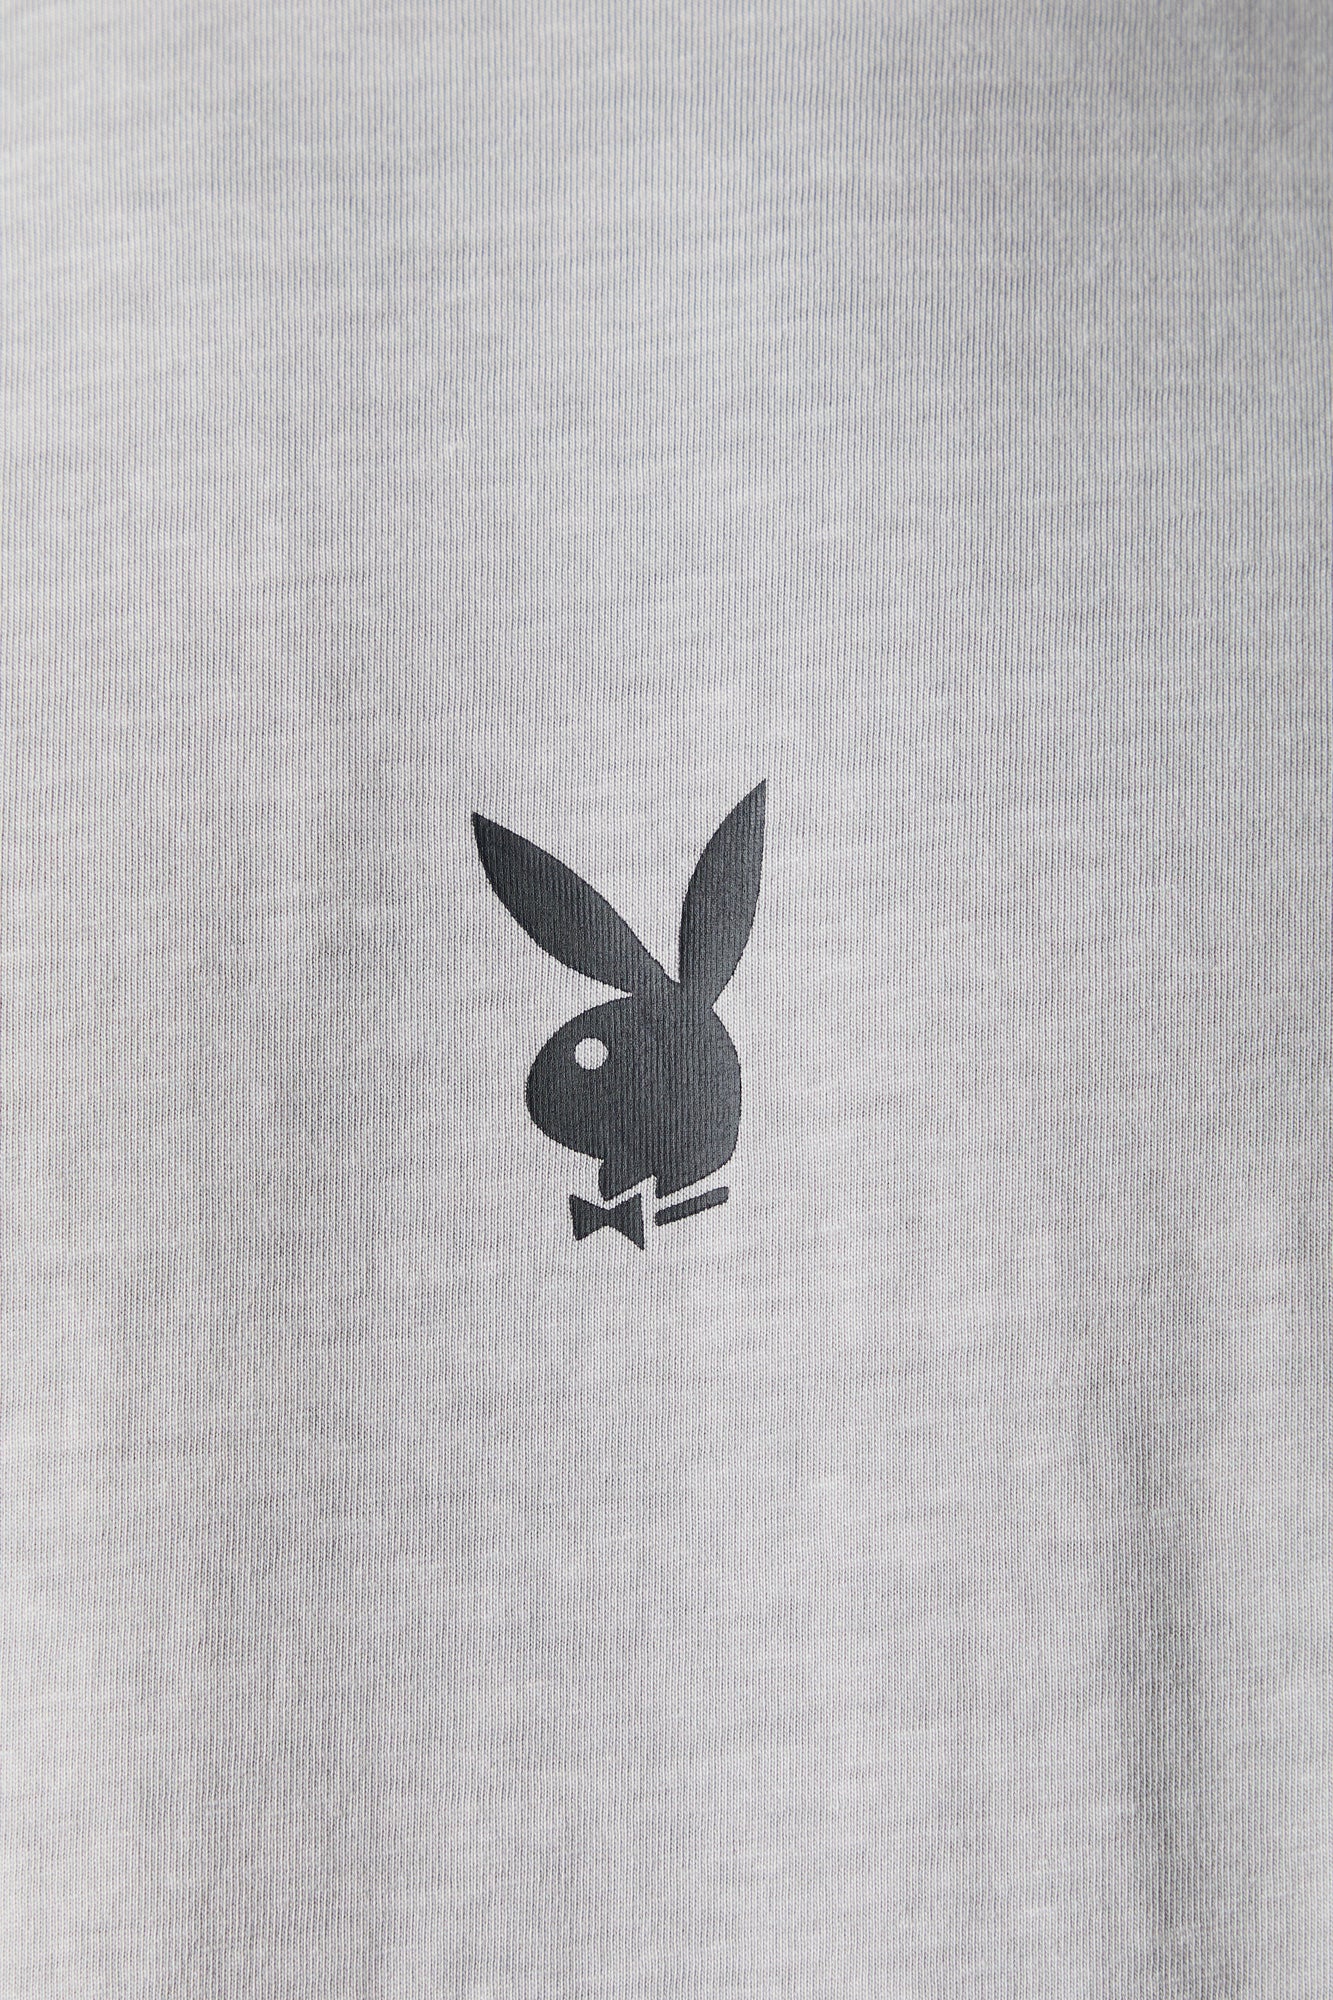 Playboy Bunny Graphic T-Shirt